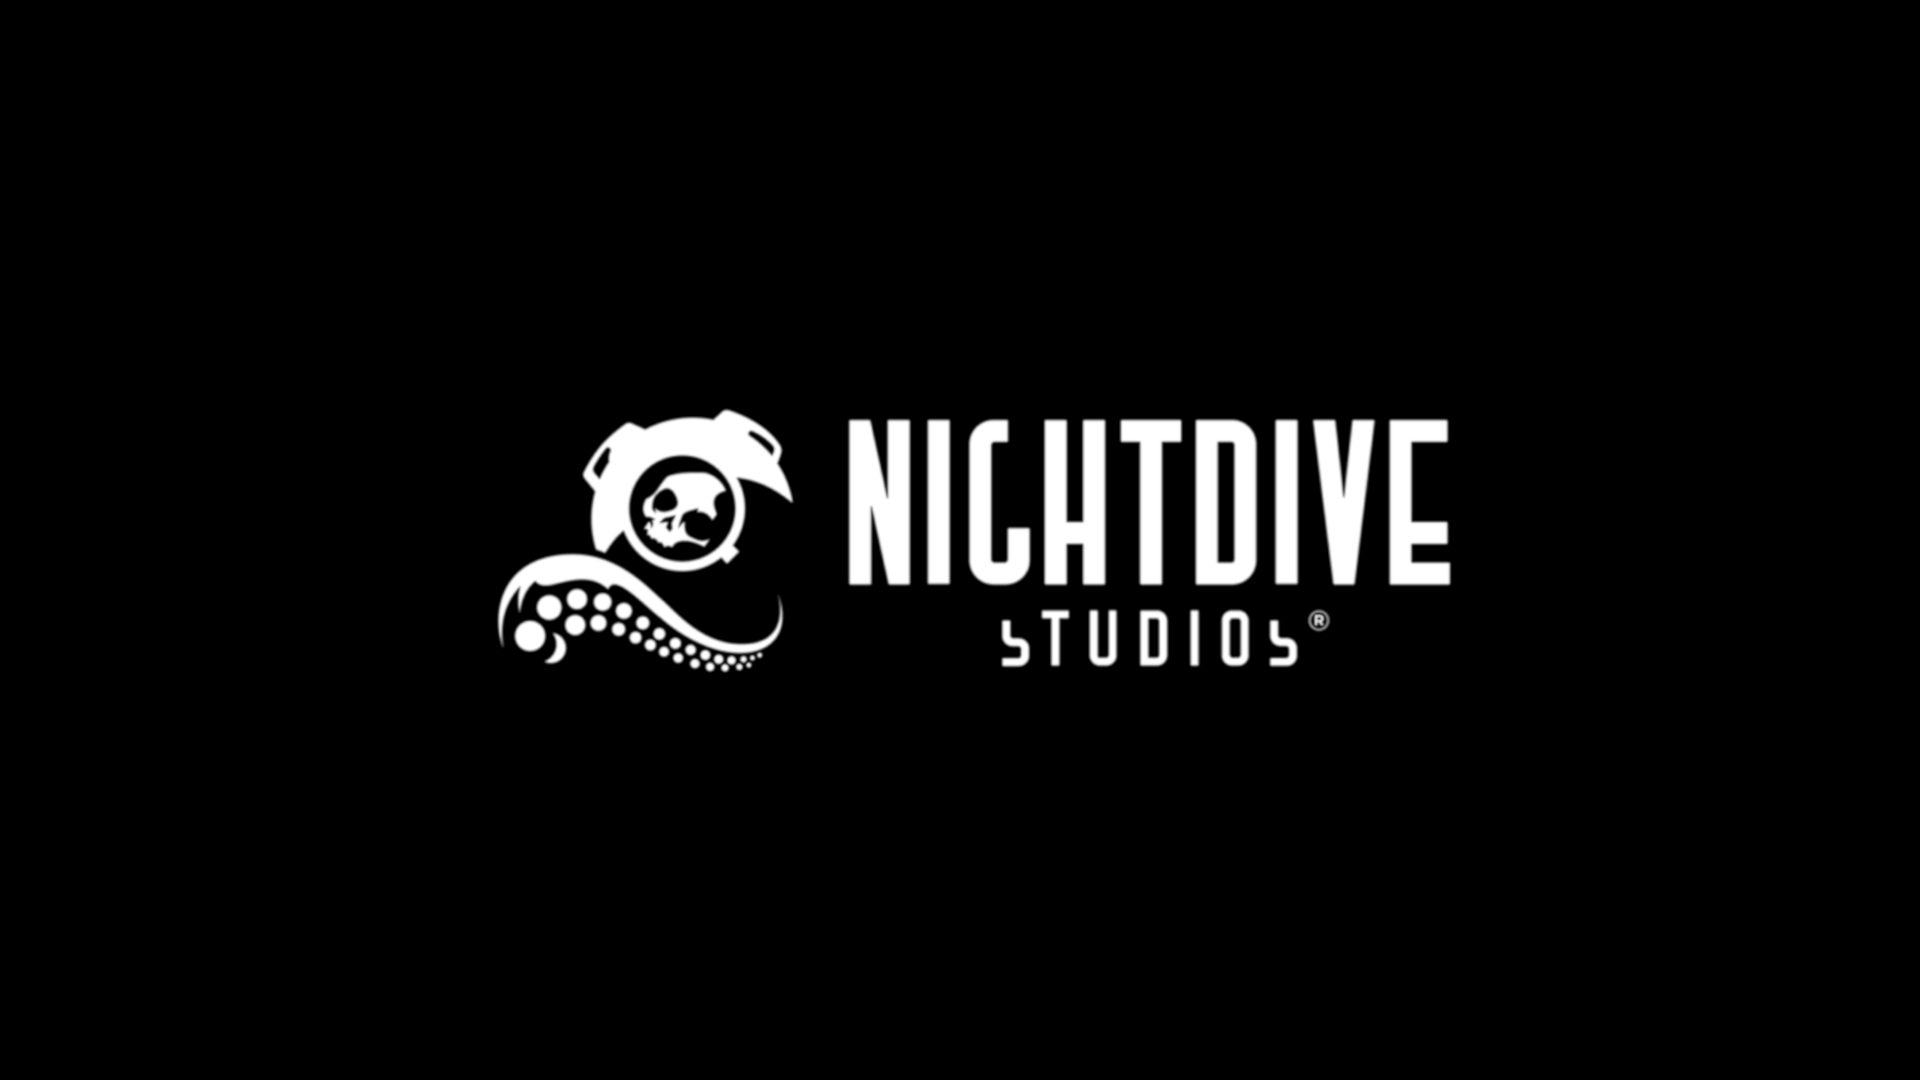 Nightdive Studios Banner Image